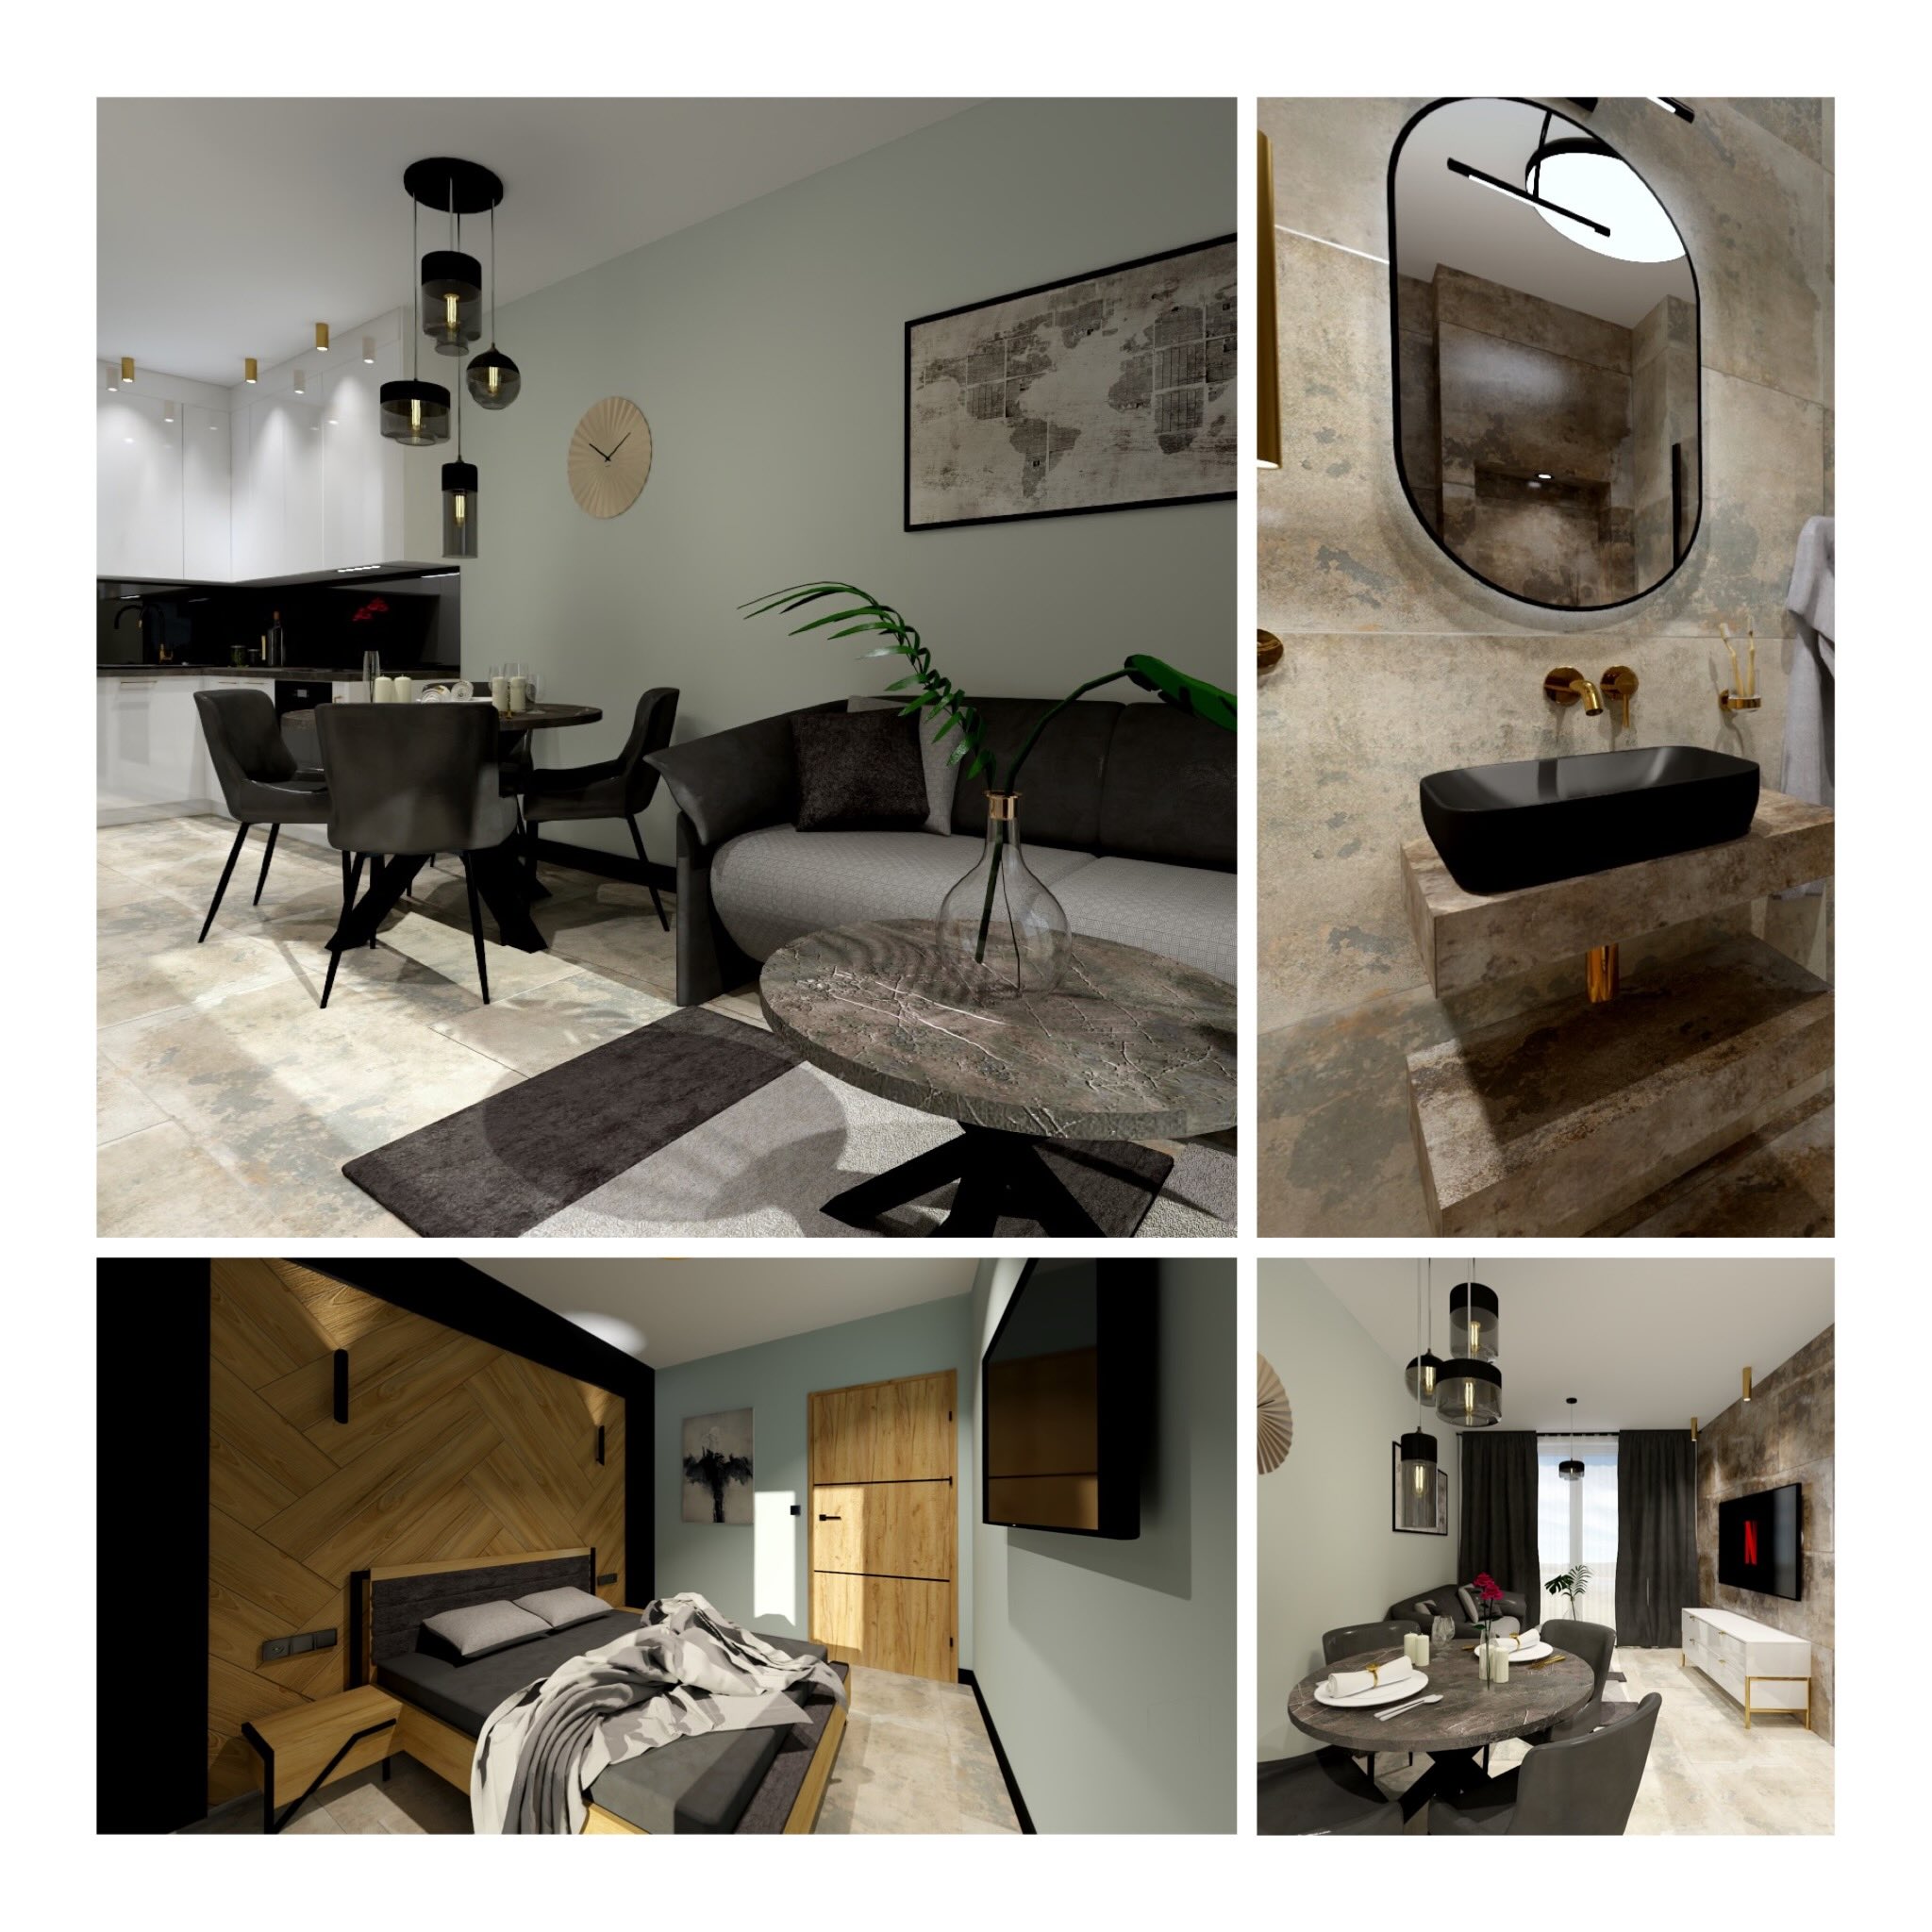 1 Bed, 1 Bath, ApartmentFor Sale, Zywiec, Silesia Province